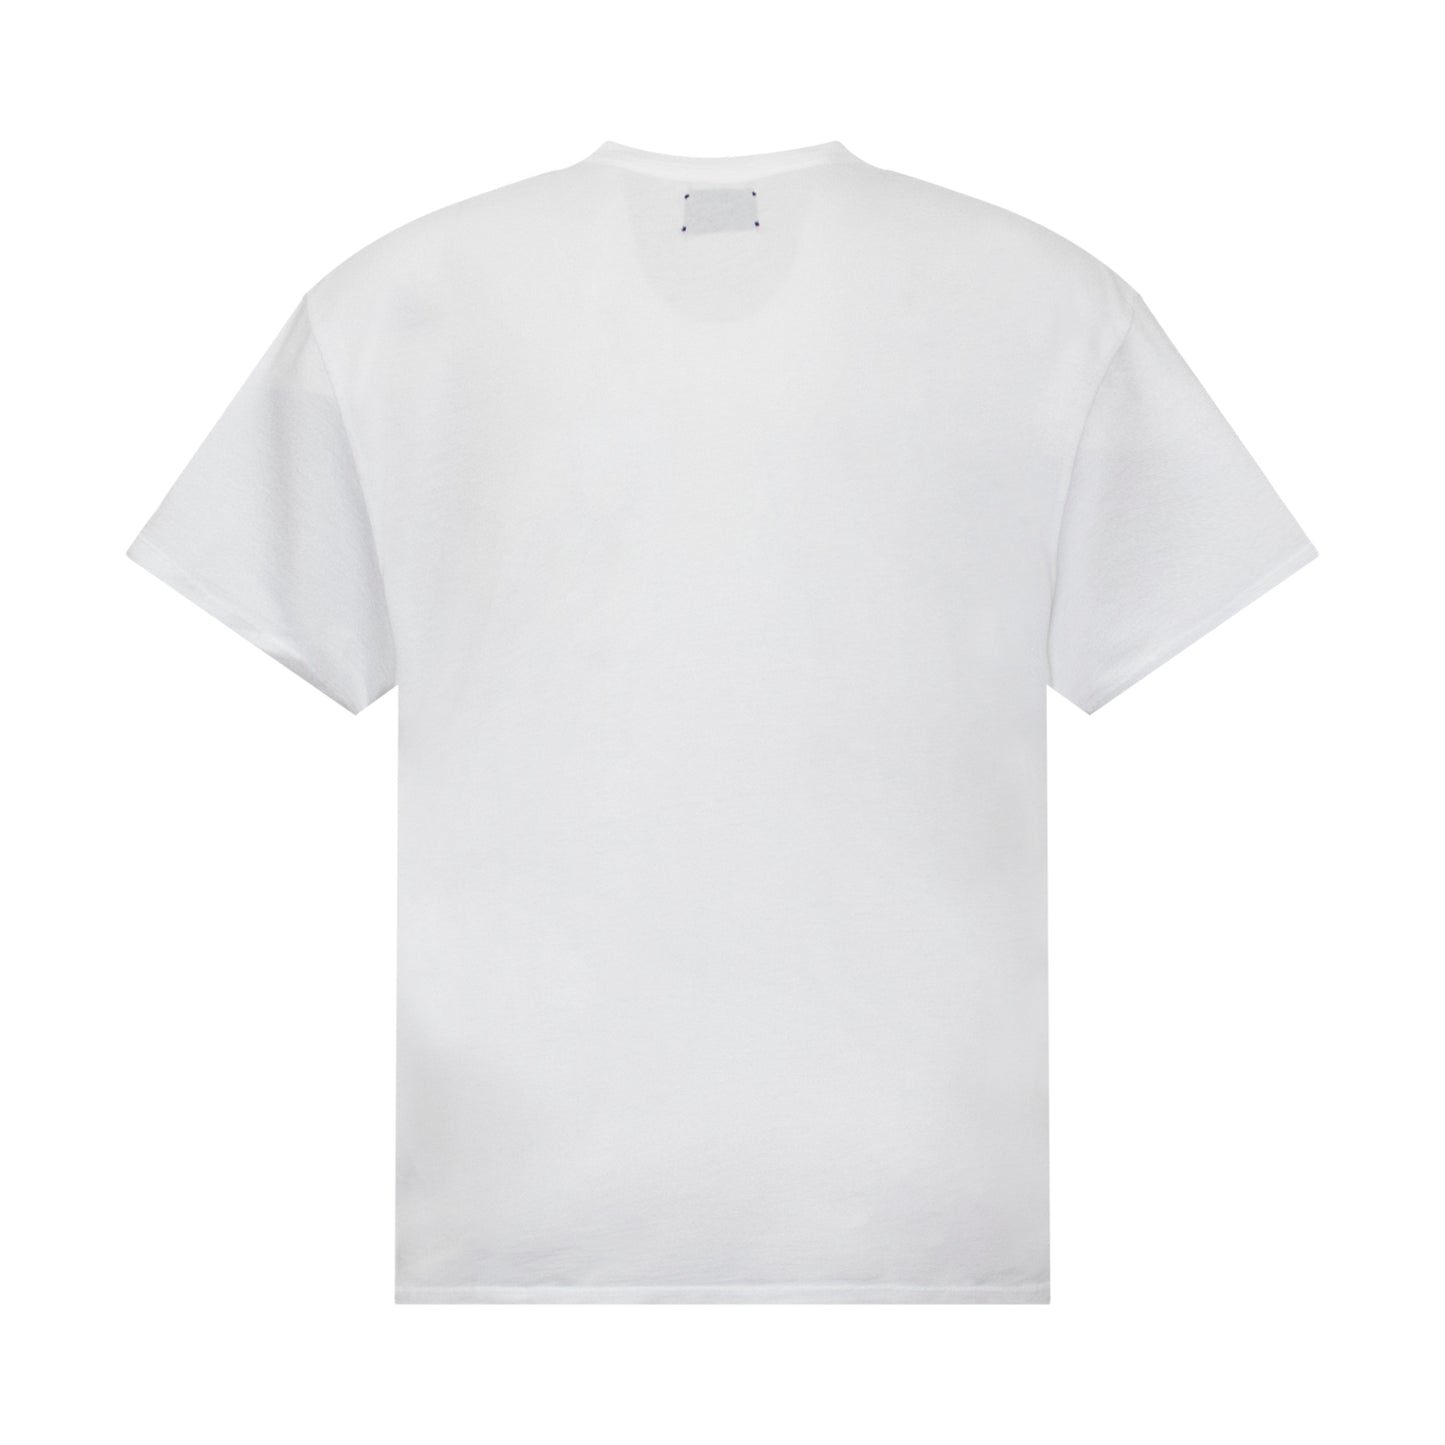 Amiri Bandana Logo T-Shirt in White